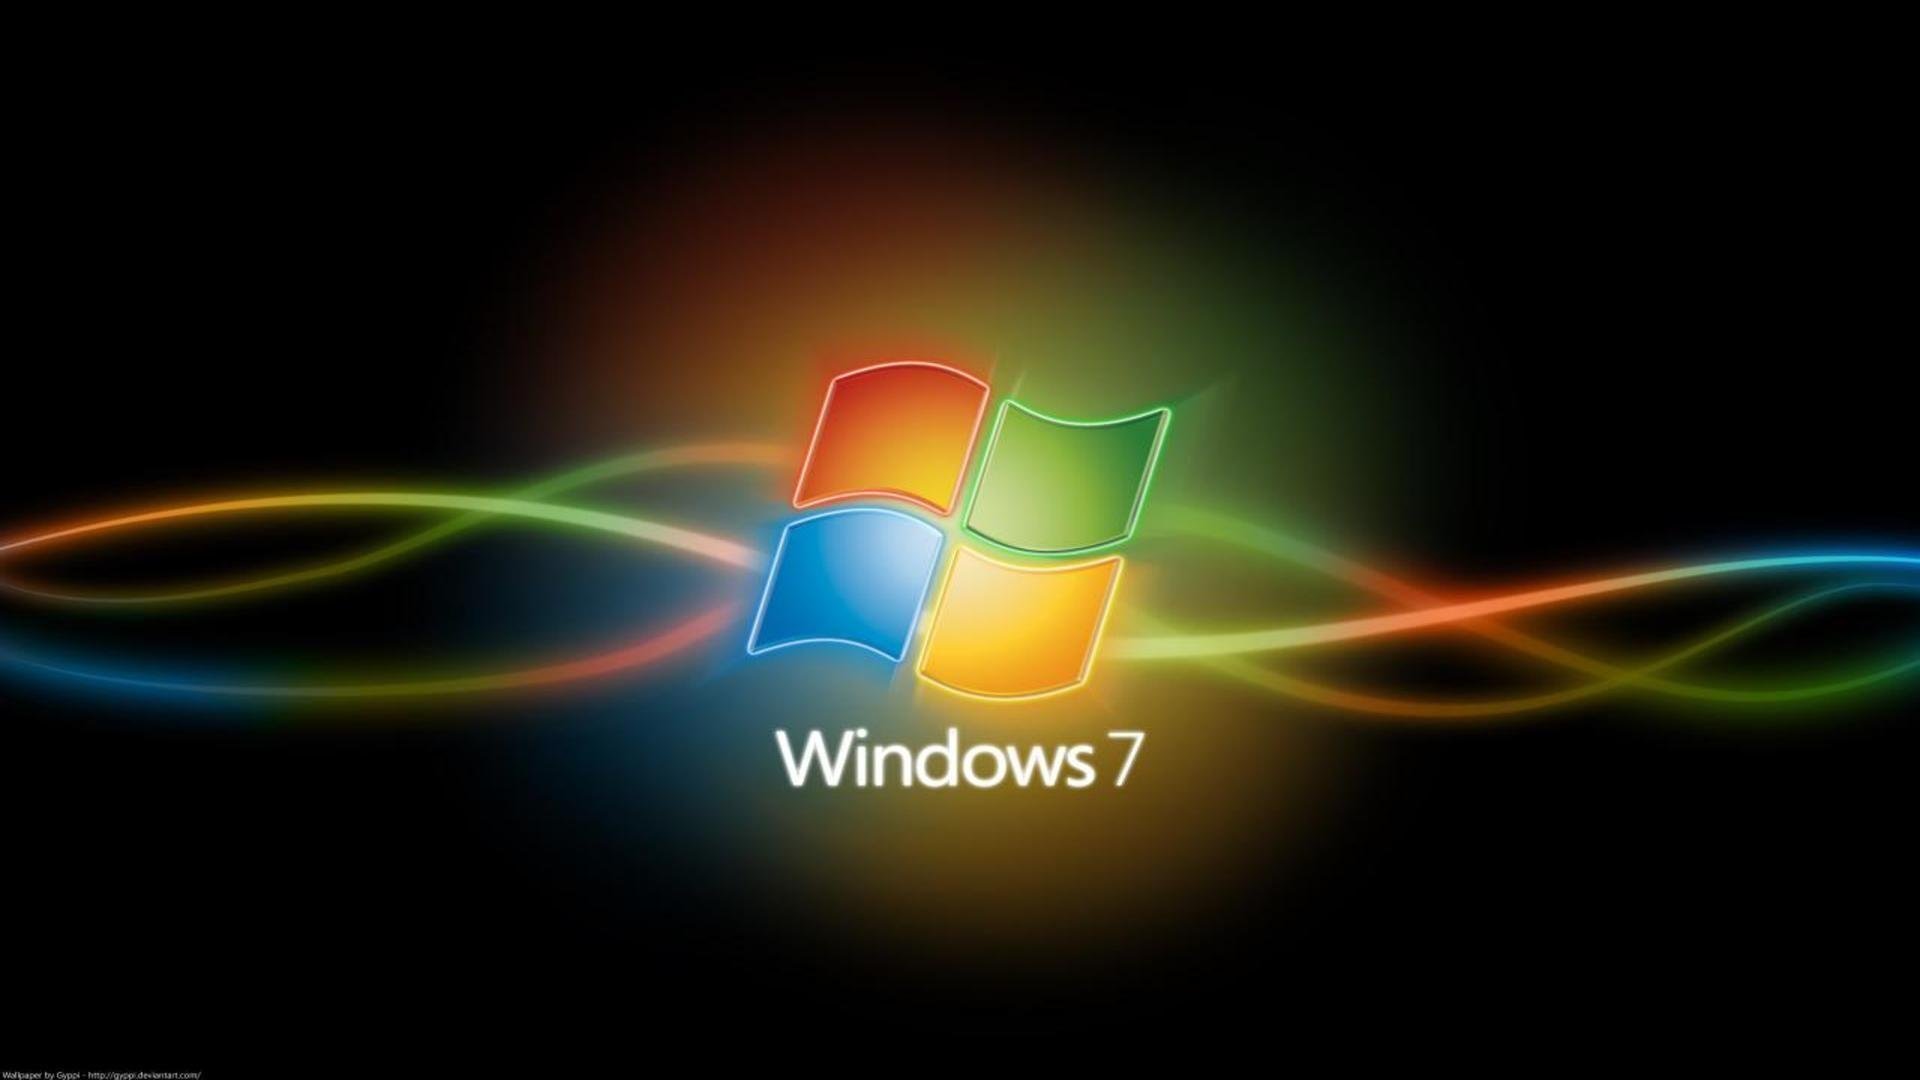 Windows 7 Wallpaper Hd Wallpaper